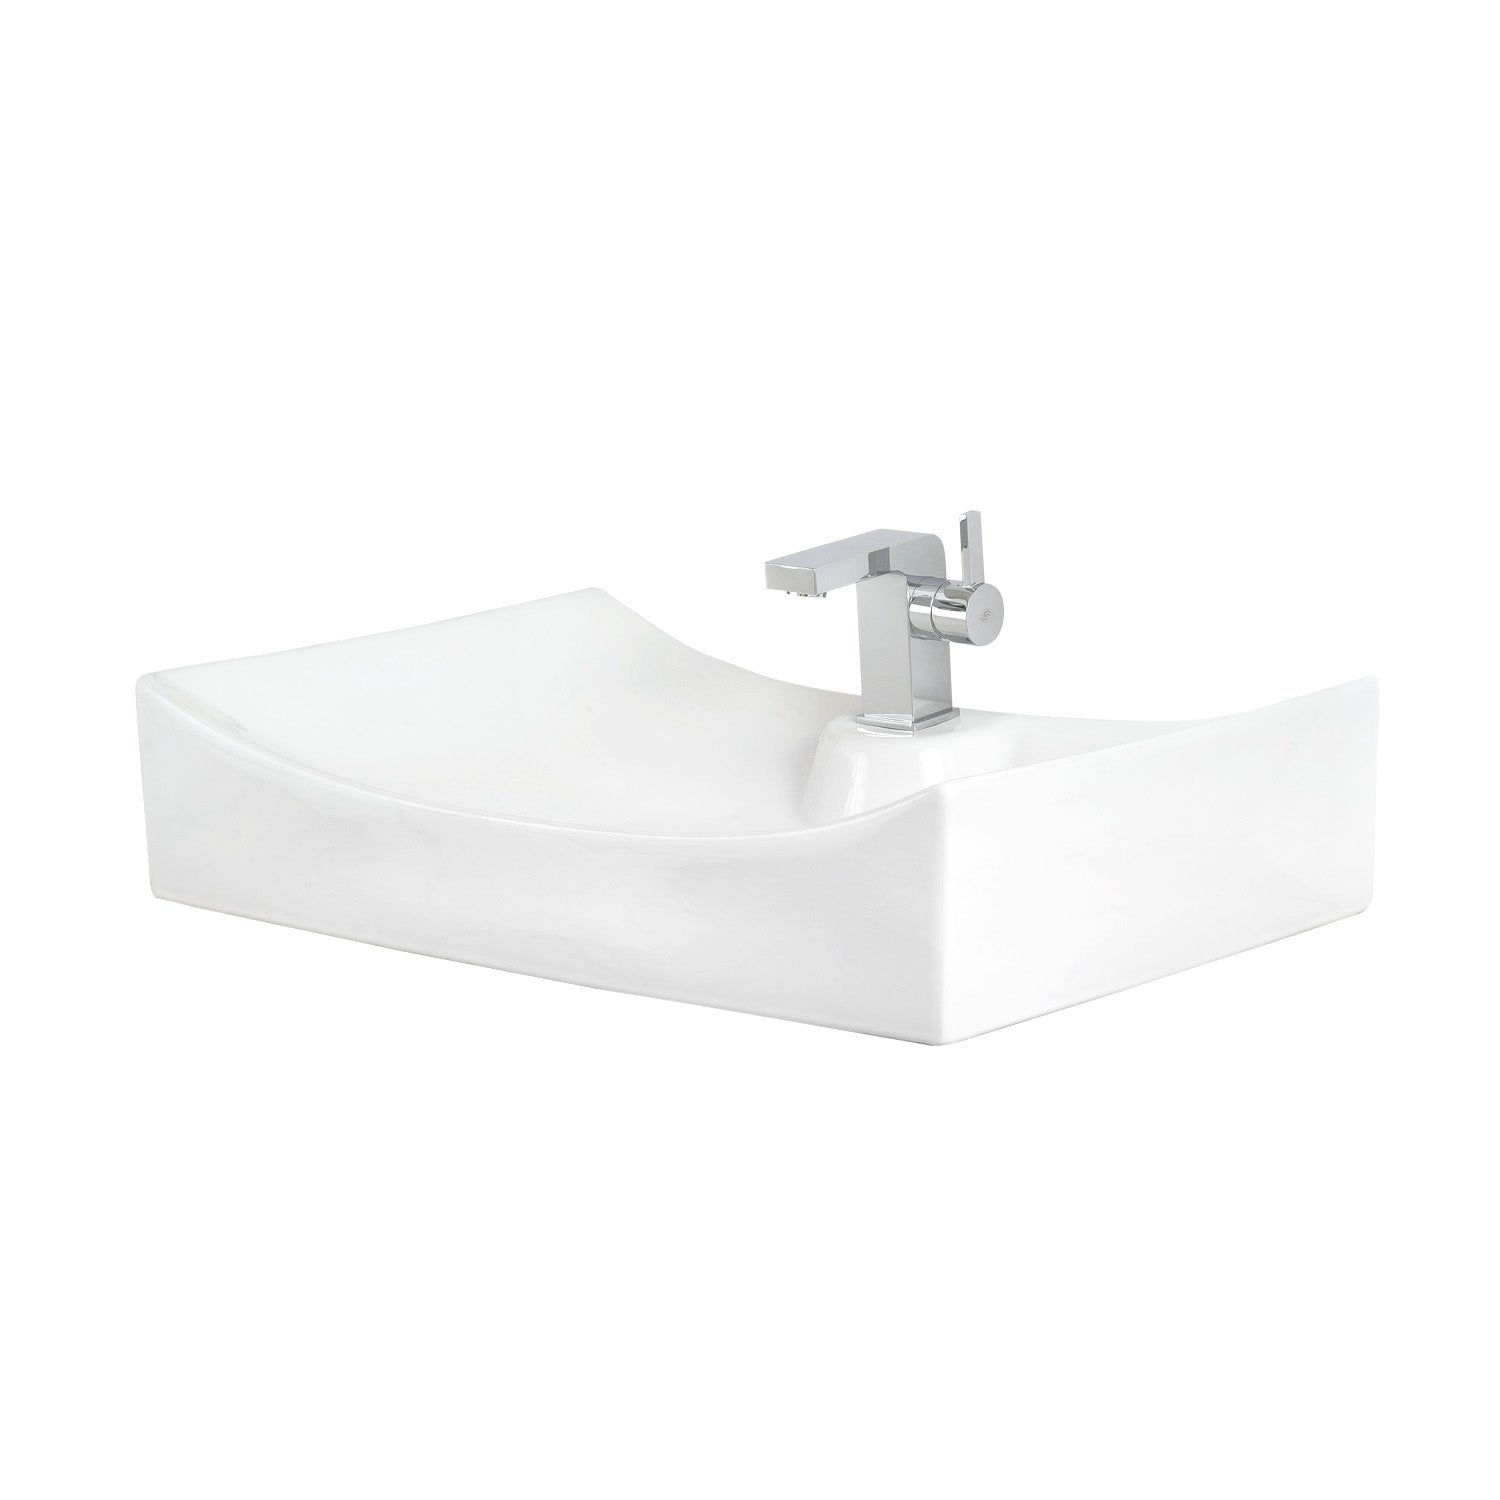 Mini lavabo 350x280 profondeur 120mm blanc